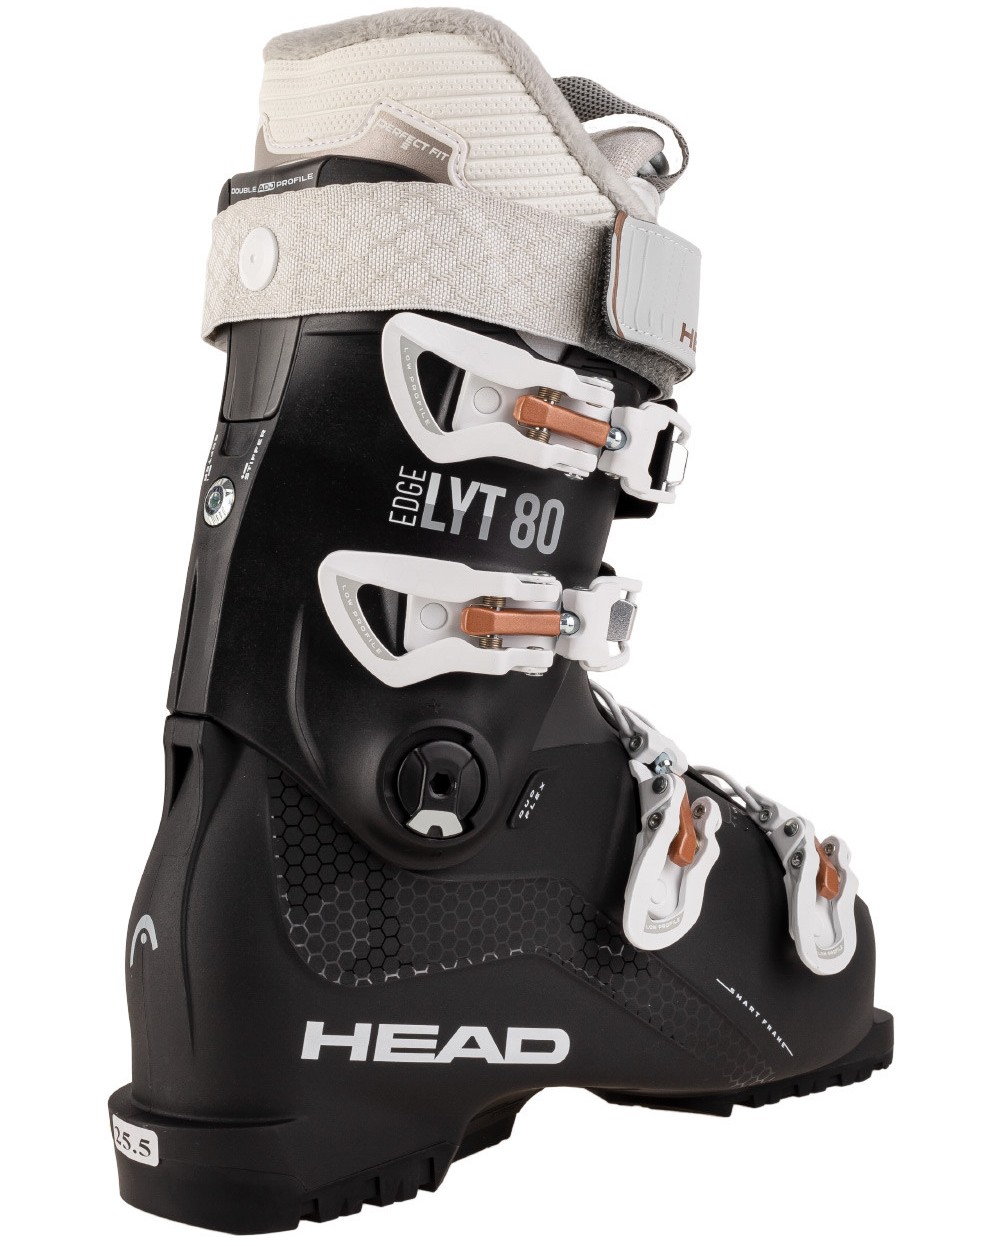 Head Edge LYT 80 Women's Ski Boots